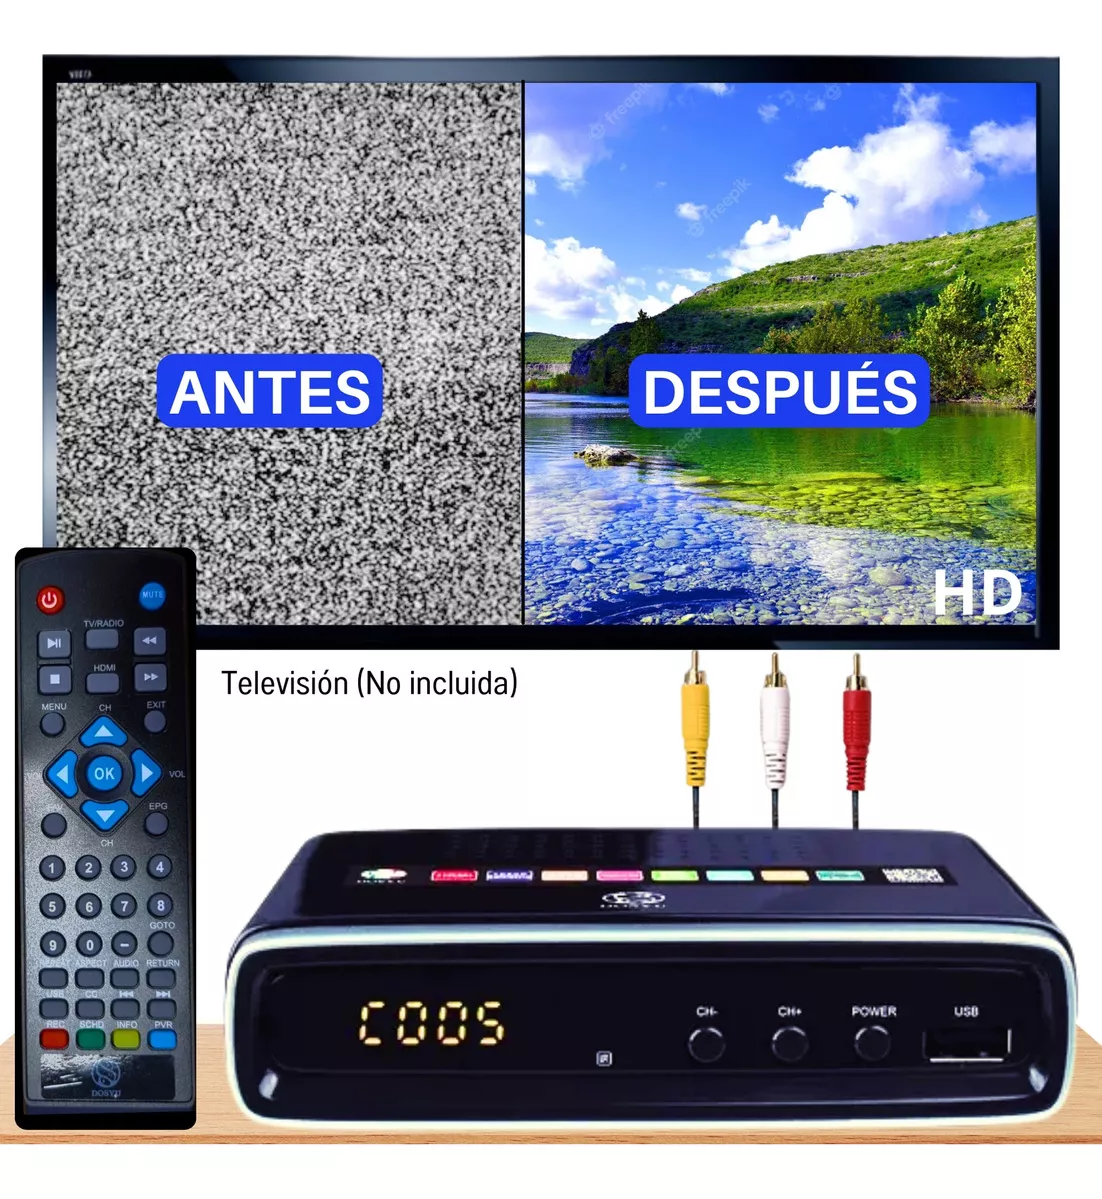 Segunda imagen para búsqueda de convertidor tv analogica a smart tv